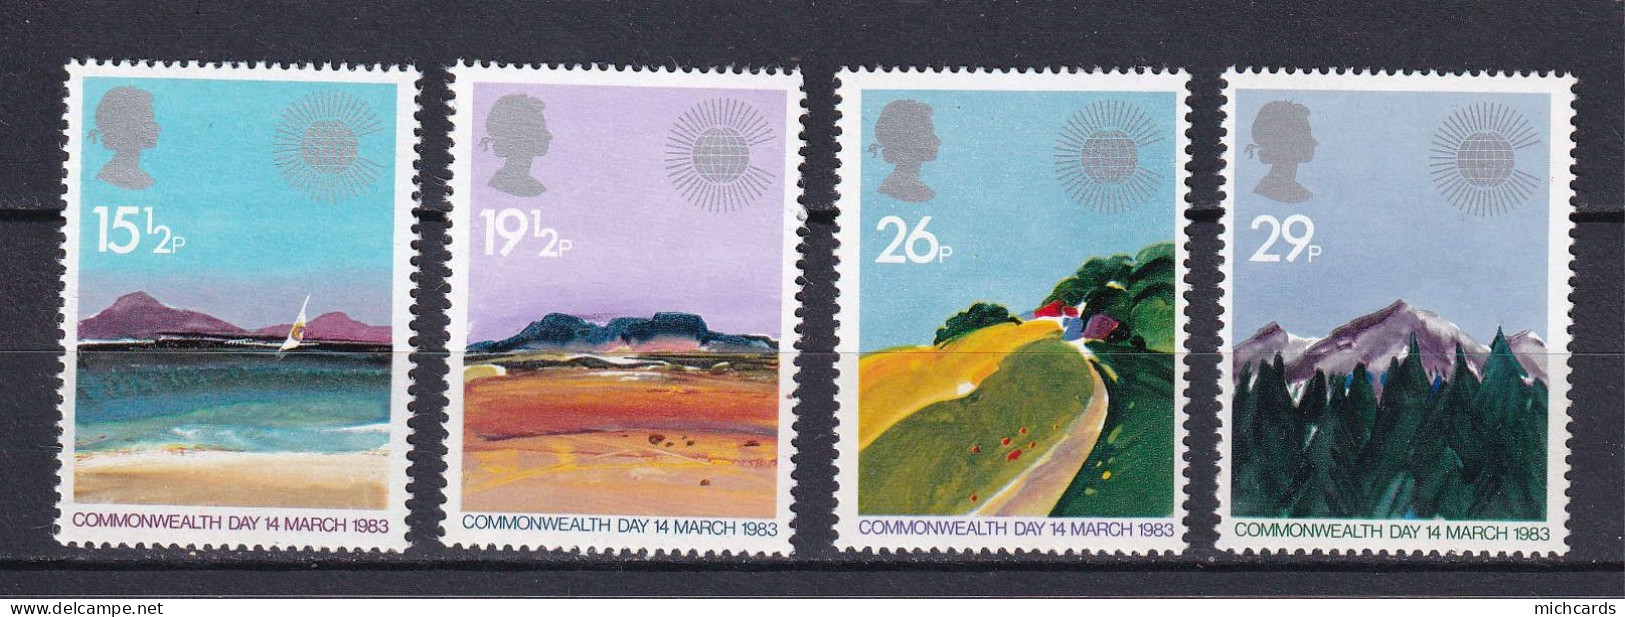 196 GRANDE BRETAGNE 1983 - Y&T 1071/74 - Paysage Climat Tropicale  Desert Aride Montagne  - Neuf ** (MNH) Sans Charniere - Unused Stamps